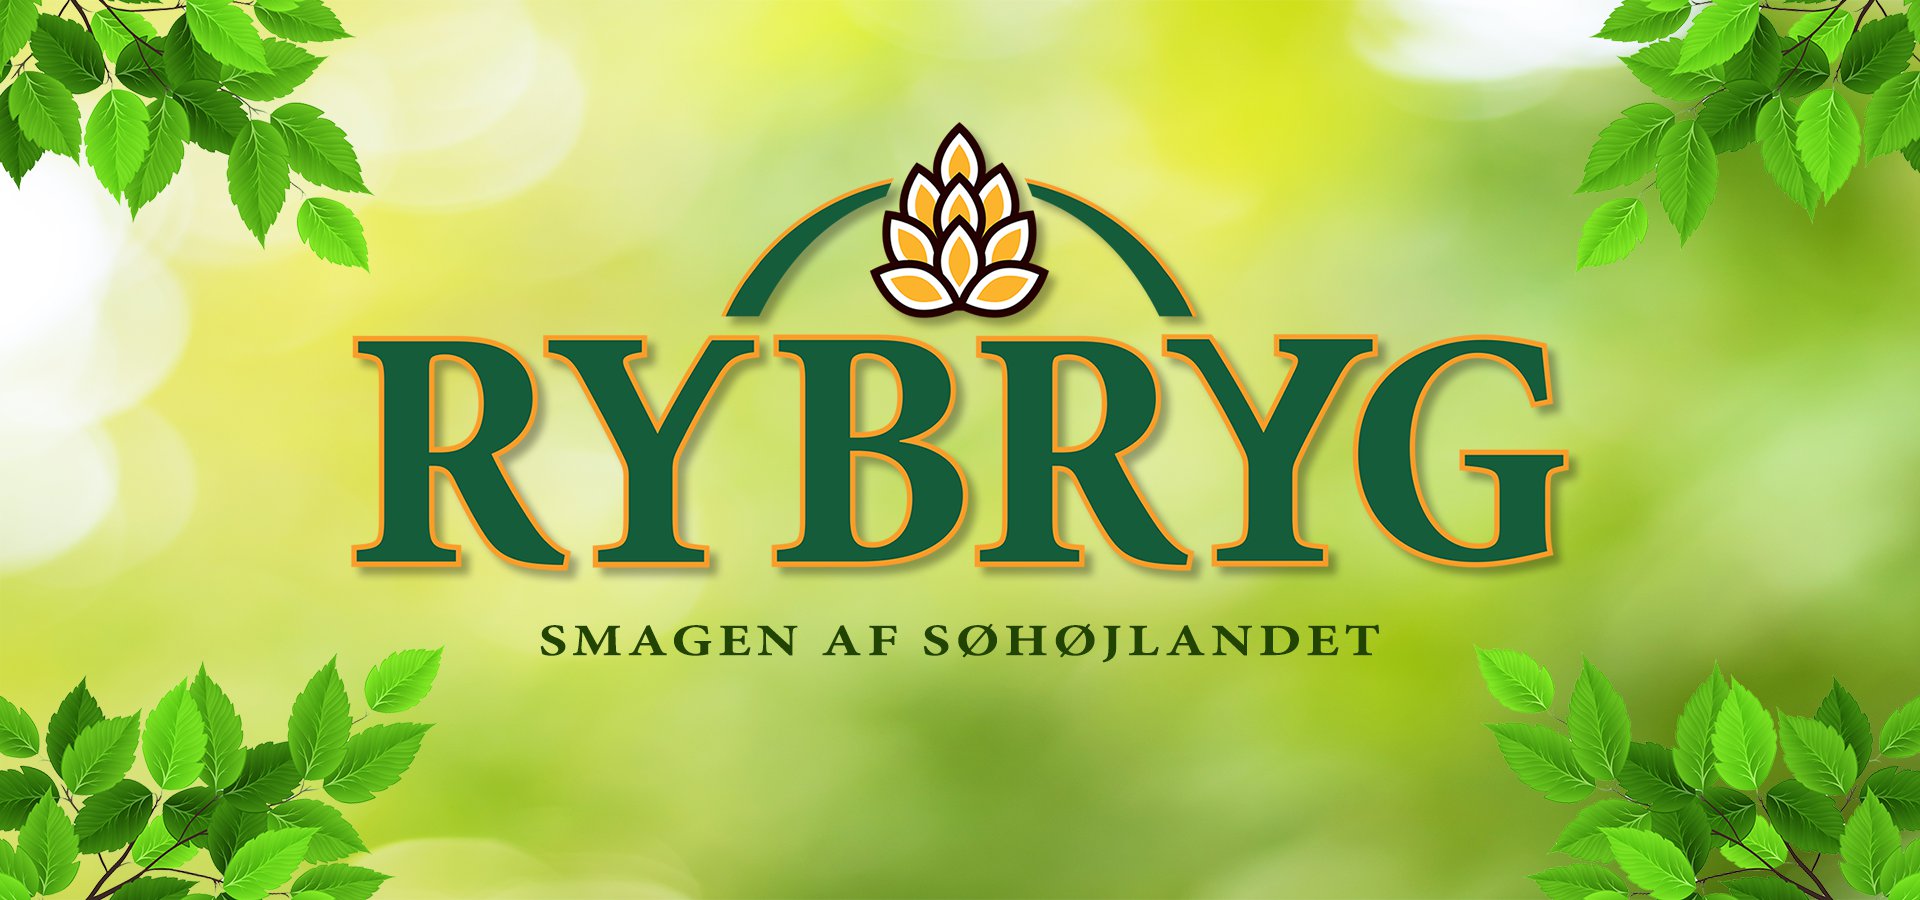 RYBRYG, øl, specialøl, special øl, Ry, Skanderborg, bryghus, Himmelbjerget øl, 8680